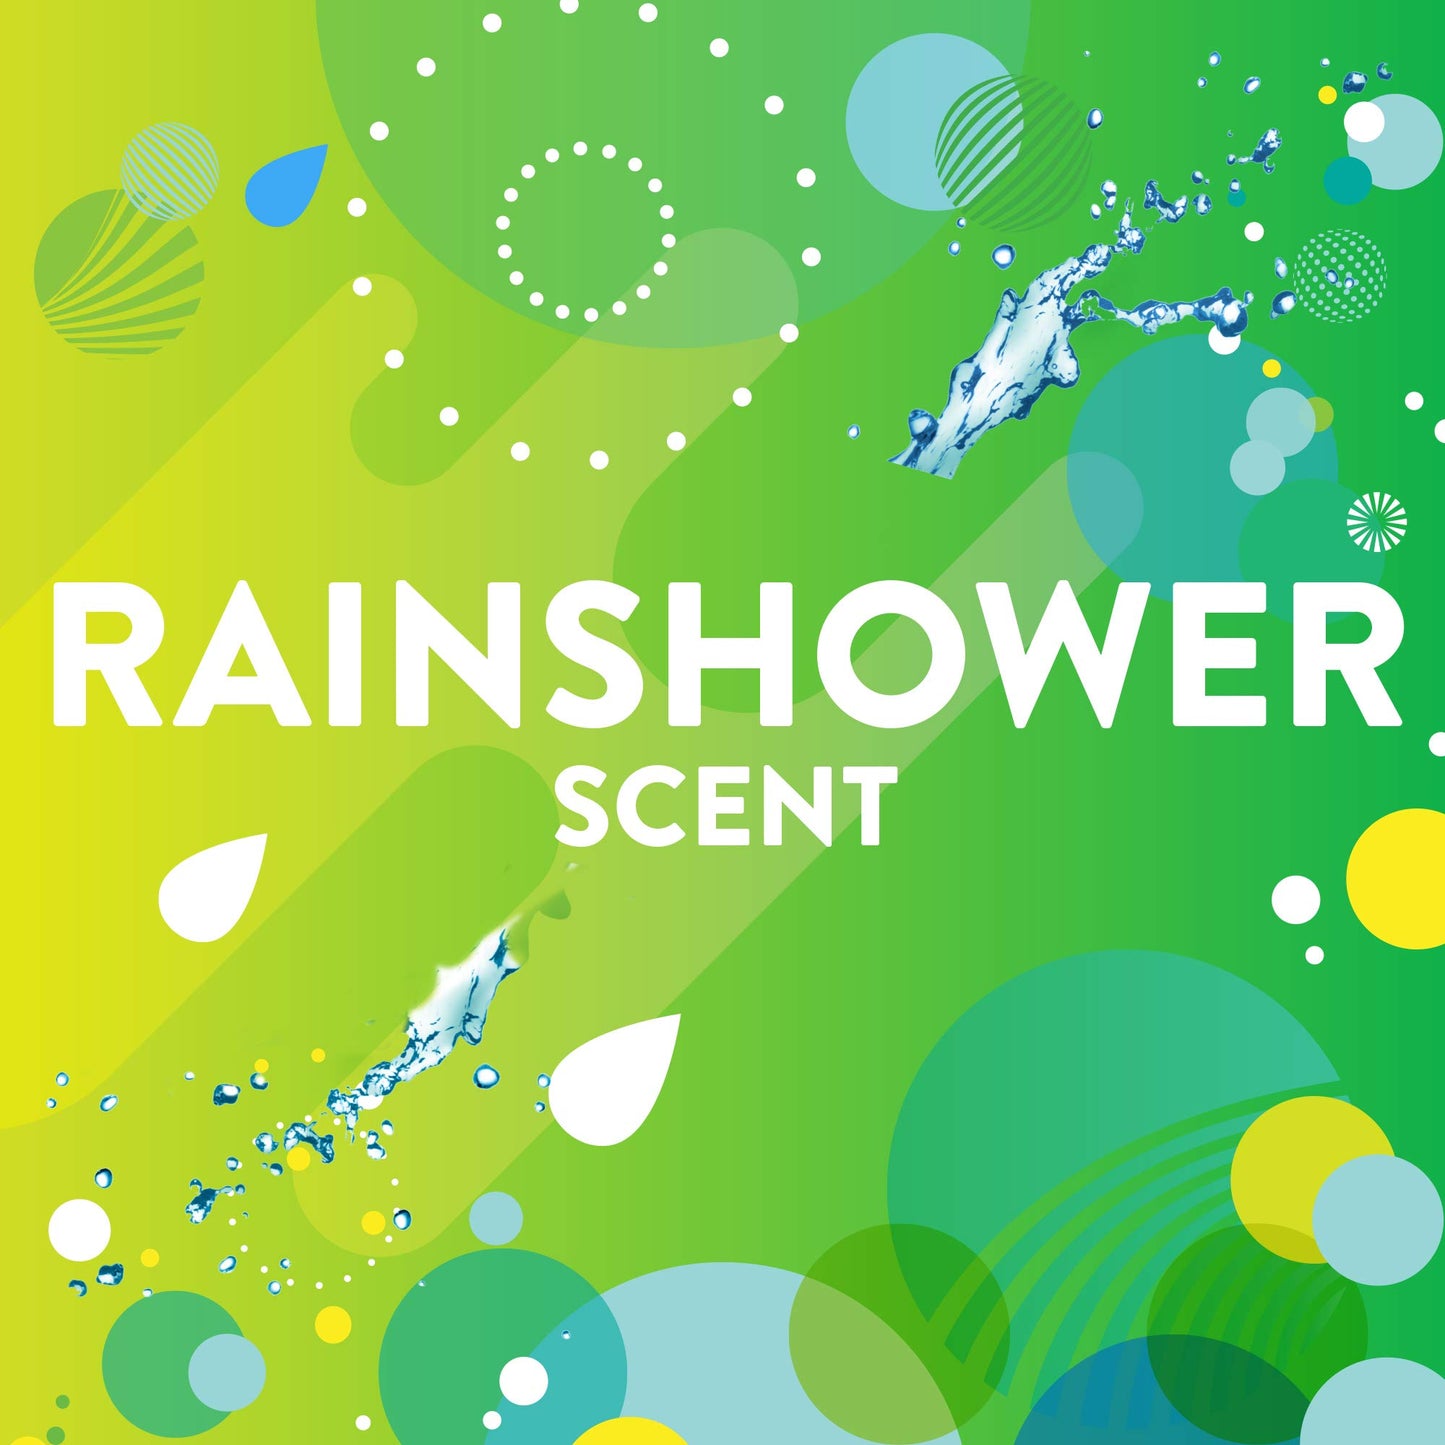 Scrubbing Bubbles Mega Shower Foamer Aerosol, Tough Foaming Bathroom, Tile, Bathtub and Disinfectant Shower Cleaner (1 Aerosol Spray), Rainshower Scent, 20 oz (Pack of 2)